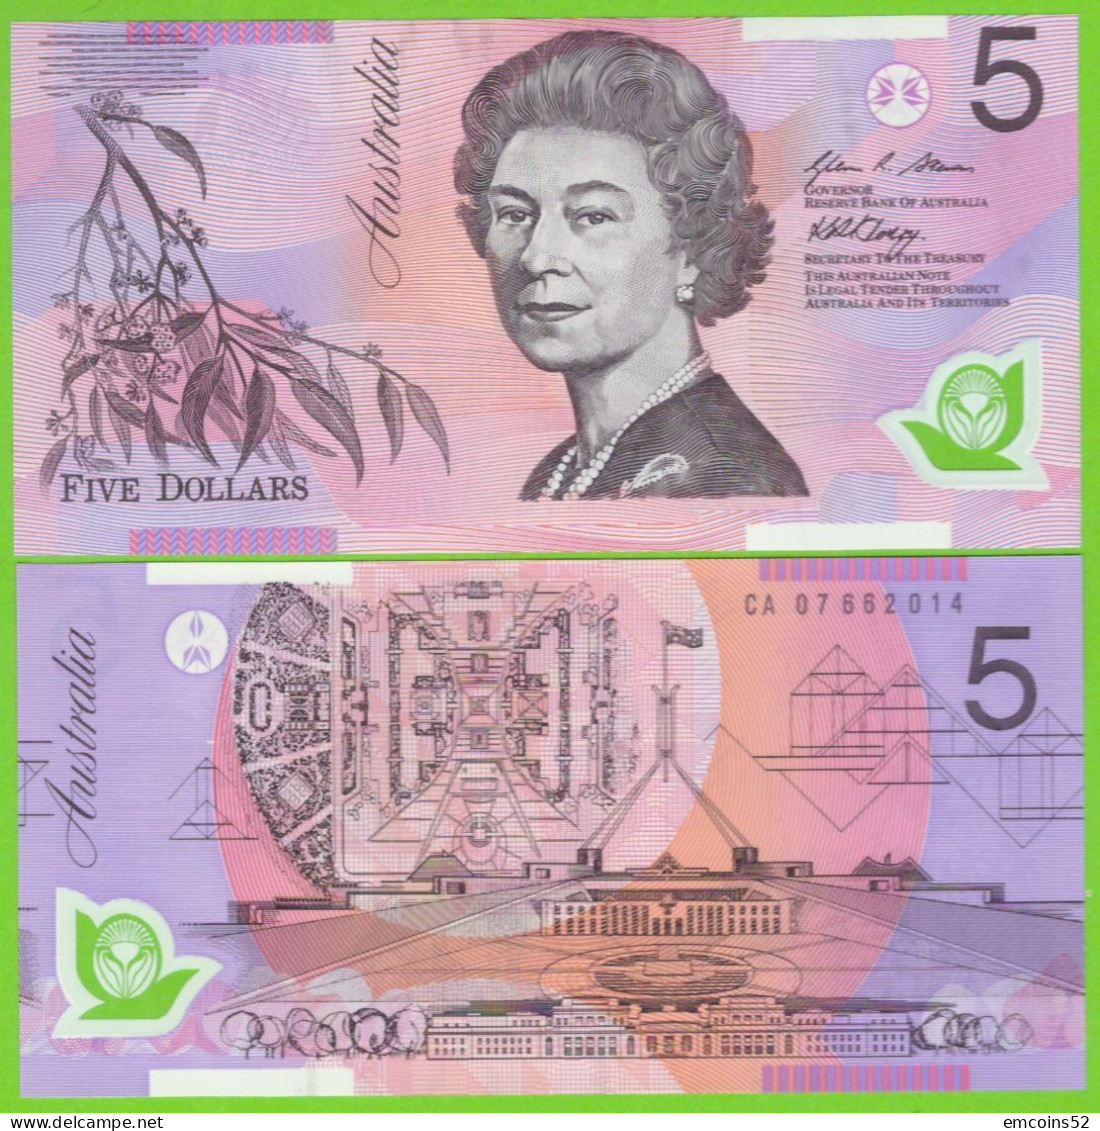 AUSTRALIA 5 DOLLARS 2007 P-57e UNC POLYMER - 2005-... (polymeerbiljetten)